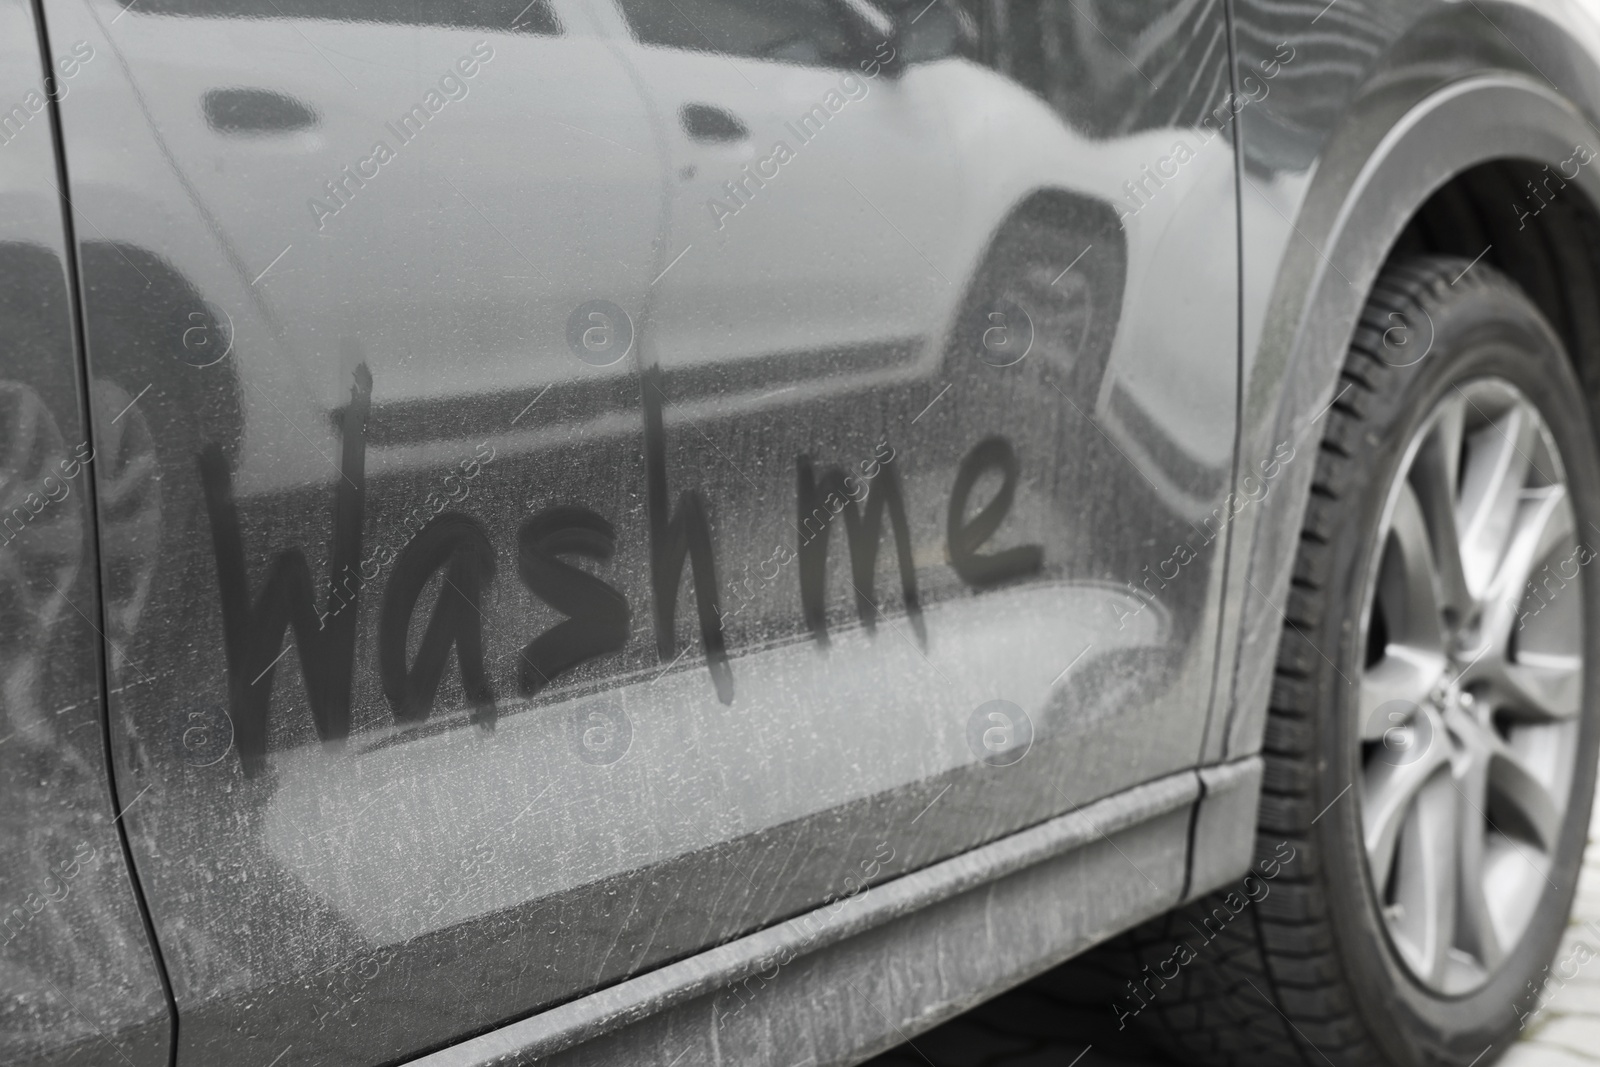 Photo of Phrase Wash Me written on dirty car, closeup